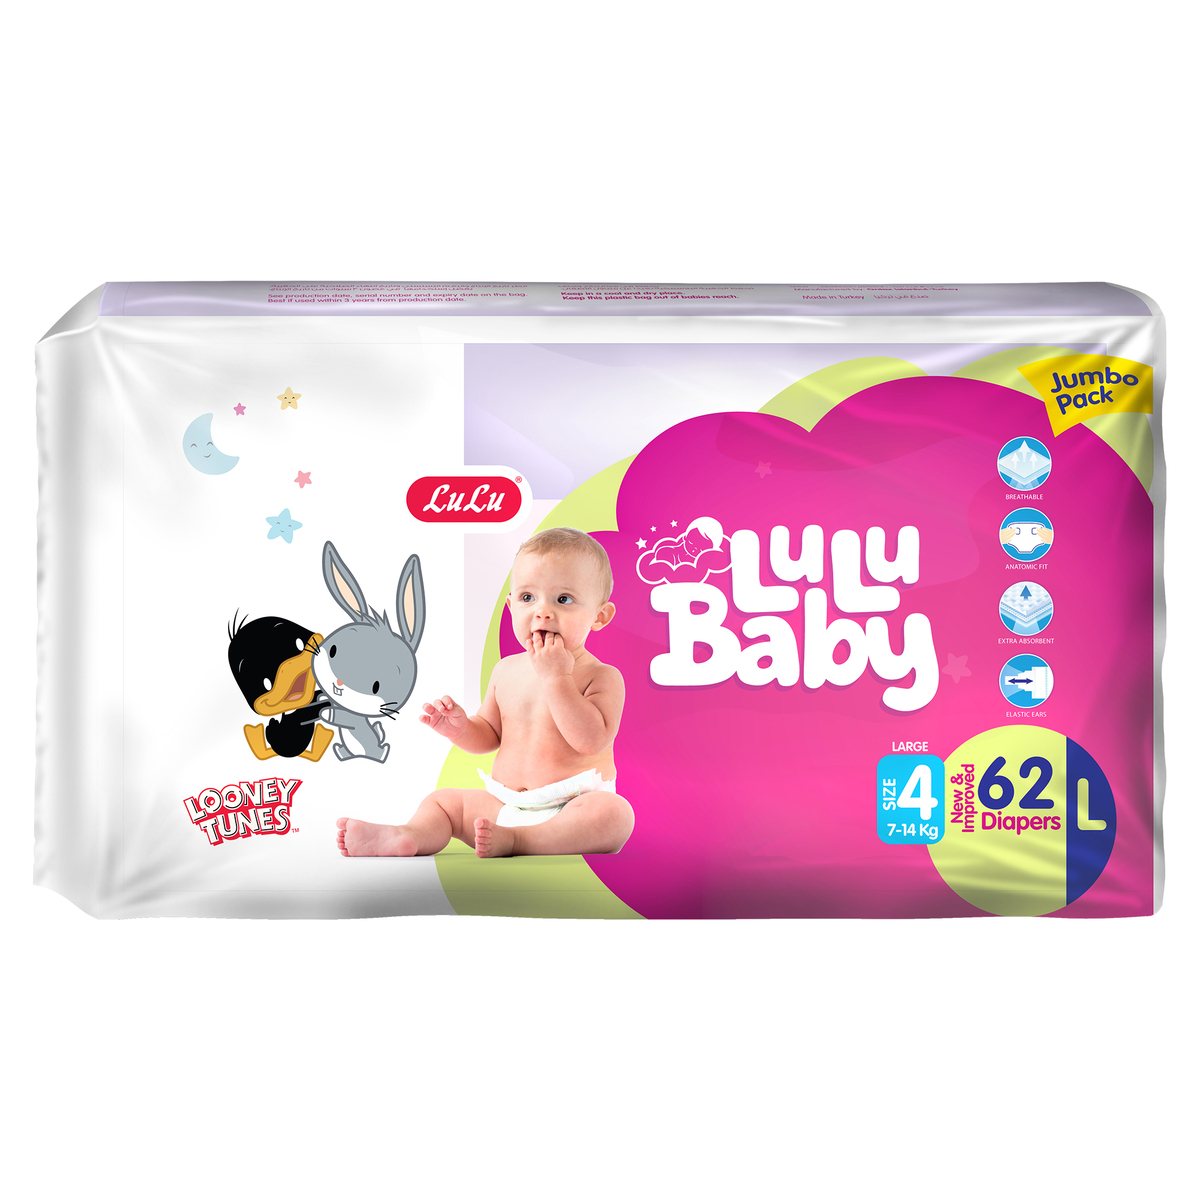 Lulu PL LuLu Baby Diaper Size 4 7-14kg Large 62pcs